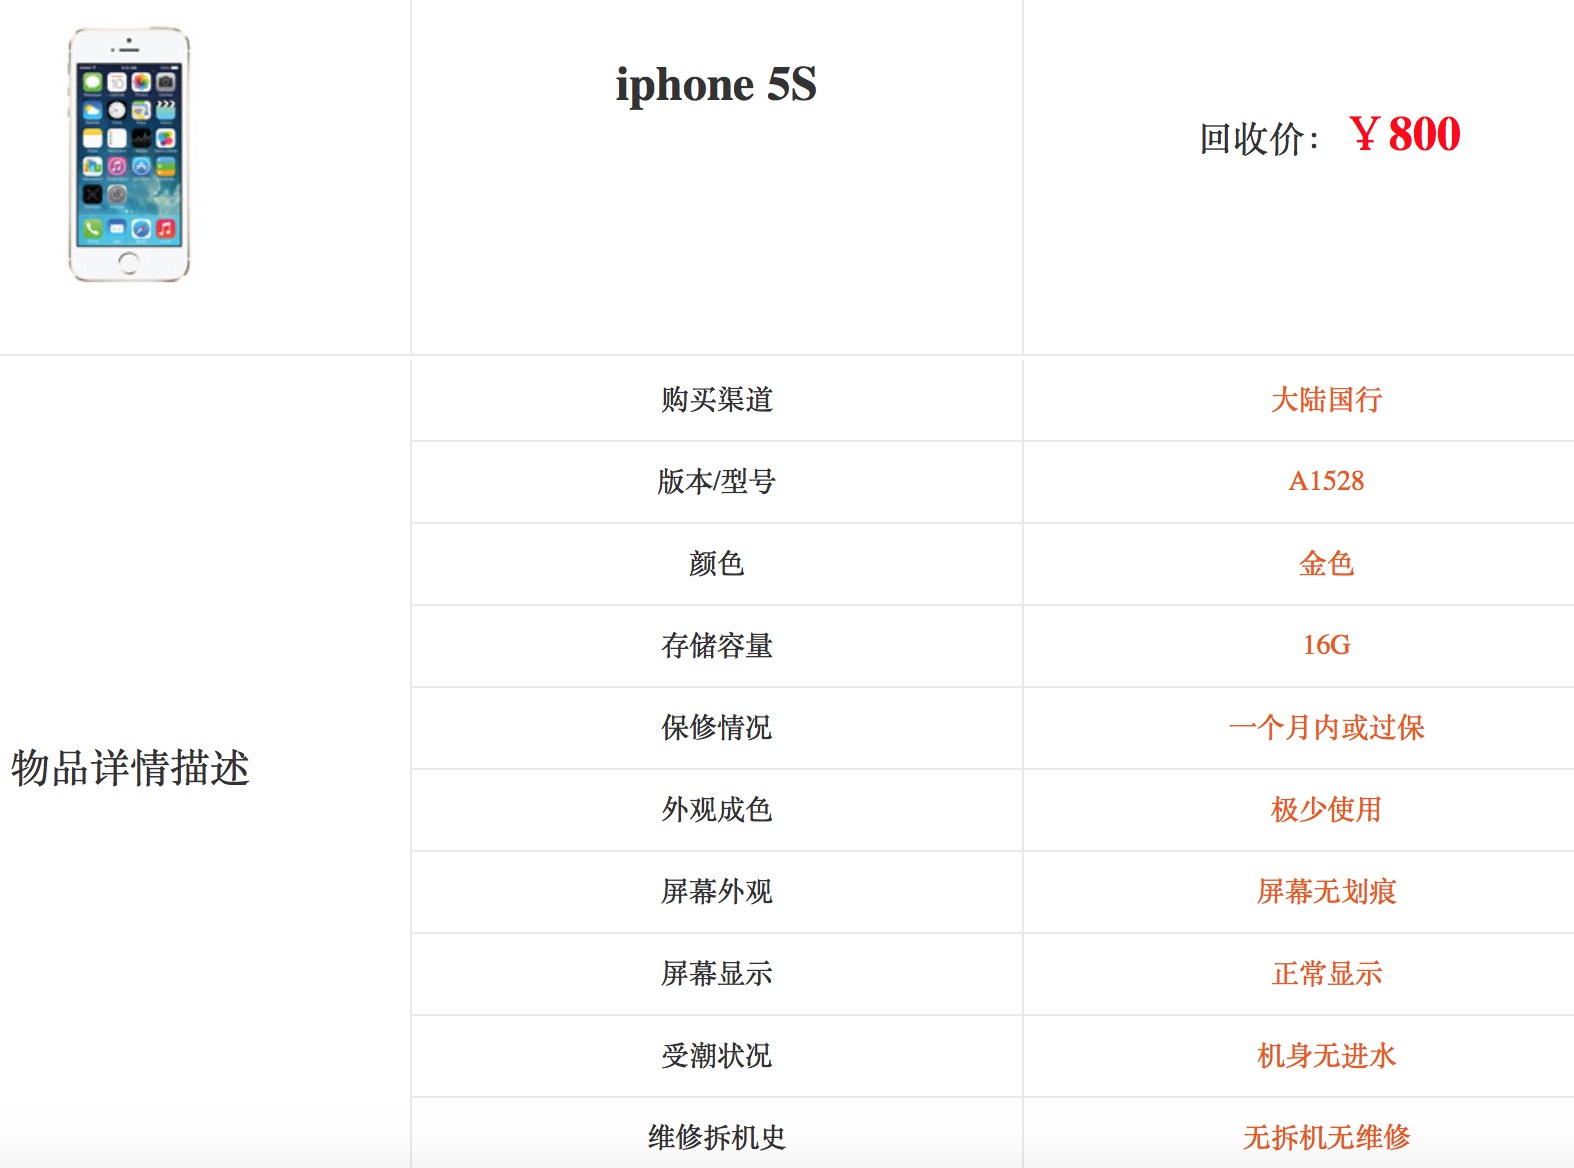 iPhone 6S Plus review | TechRadar